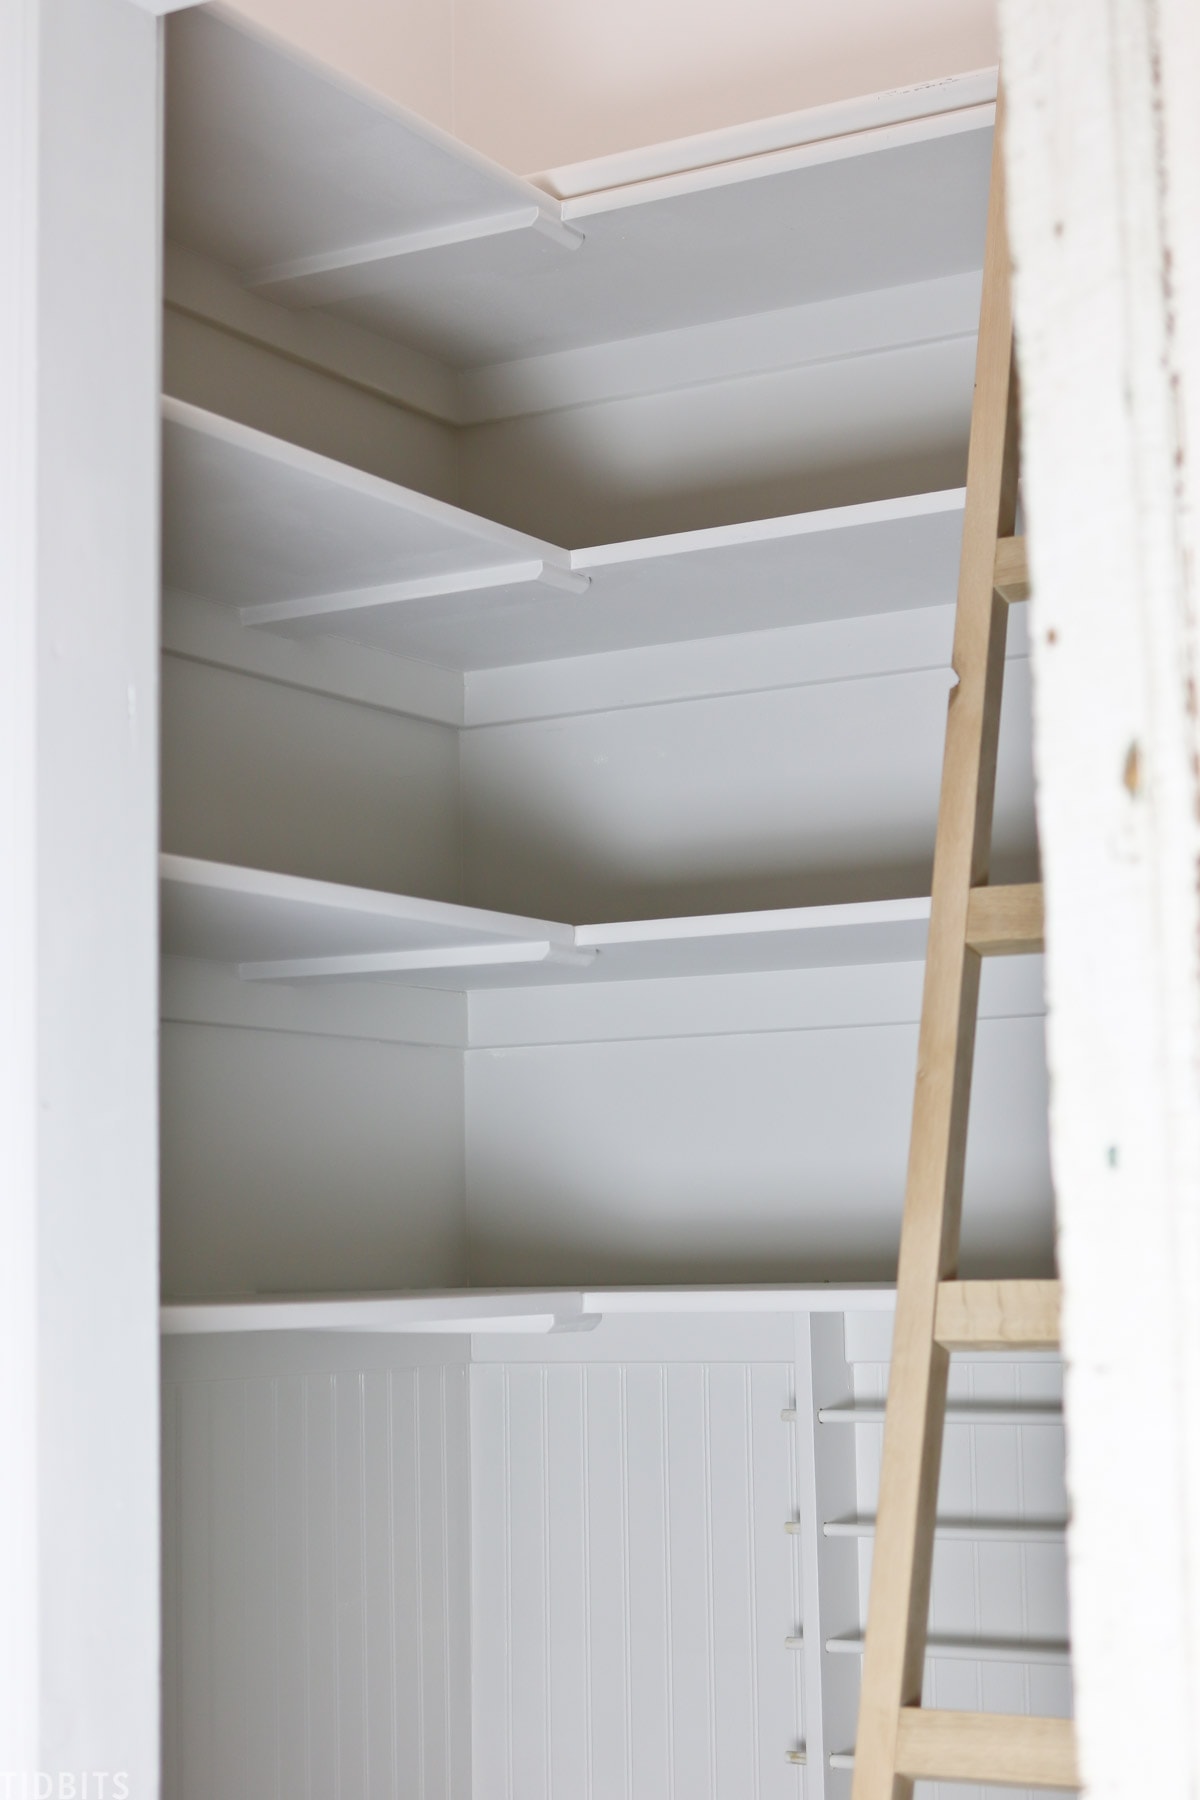 Building a Multi-Purpose Storage Closet